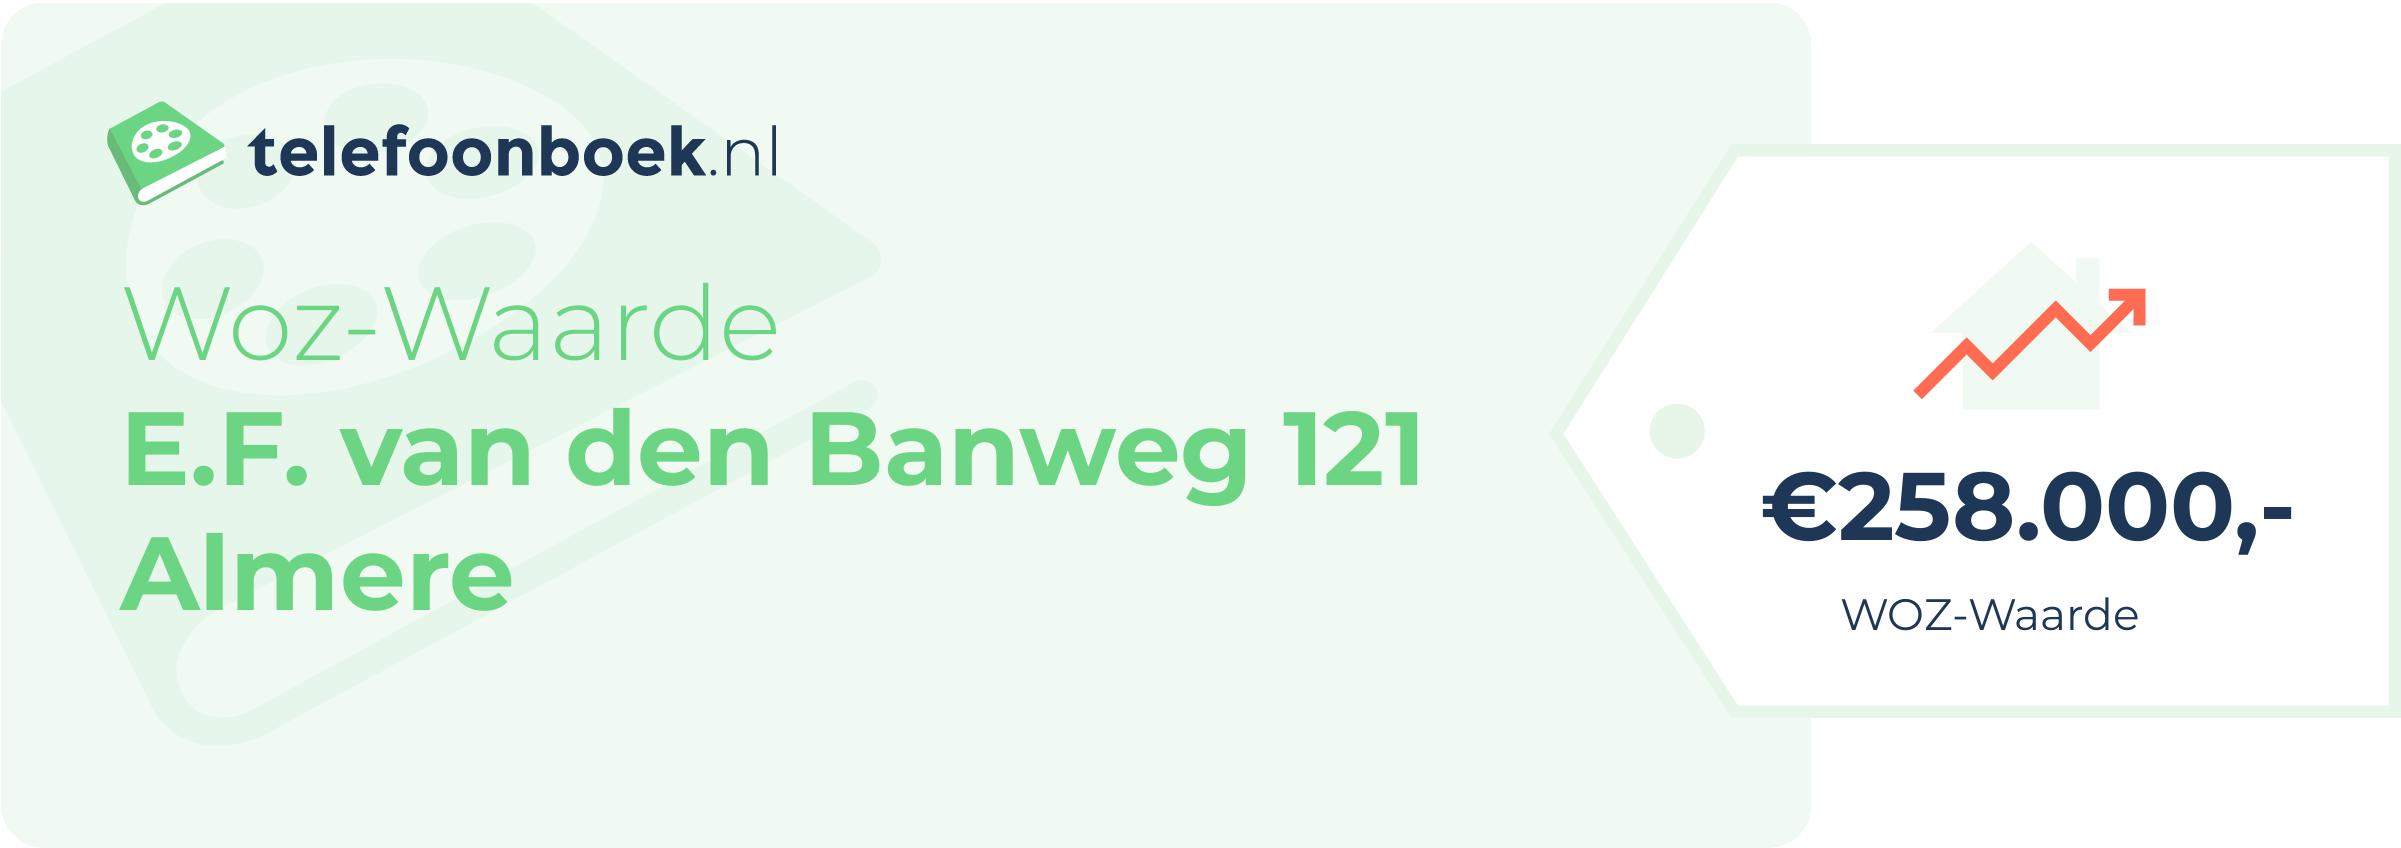 WOZ-waarde E.F. Van Den Banweg 121 Almere